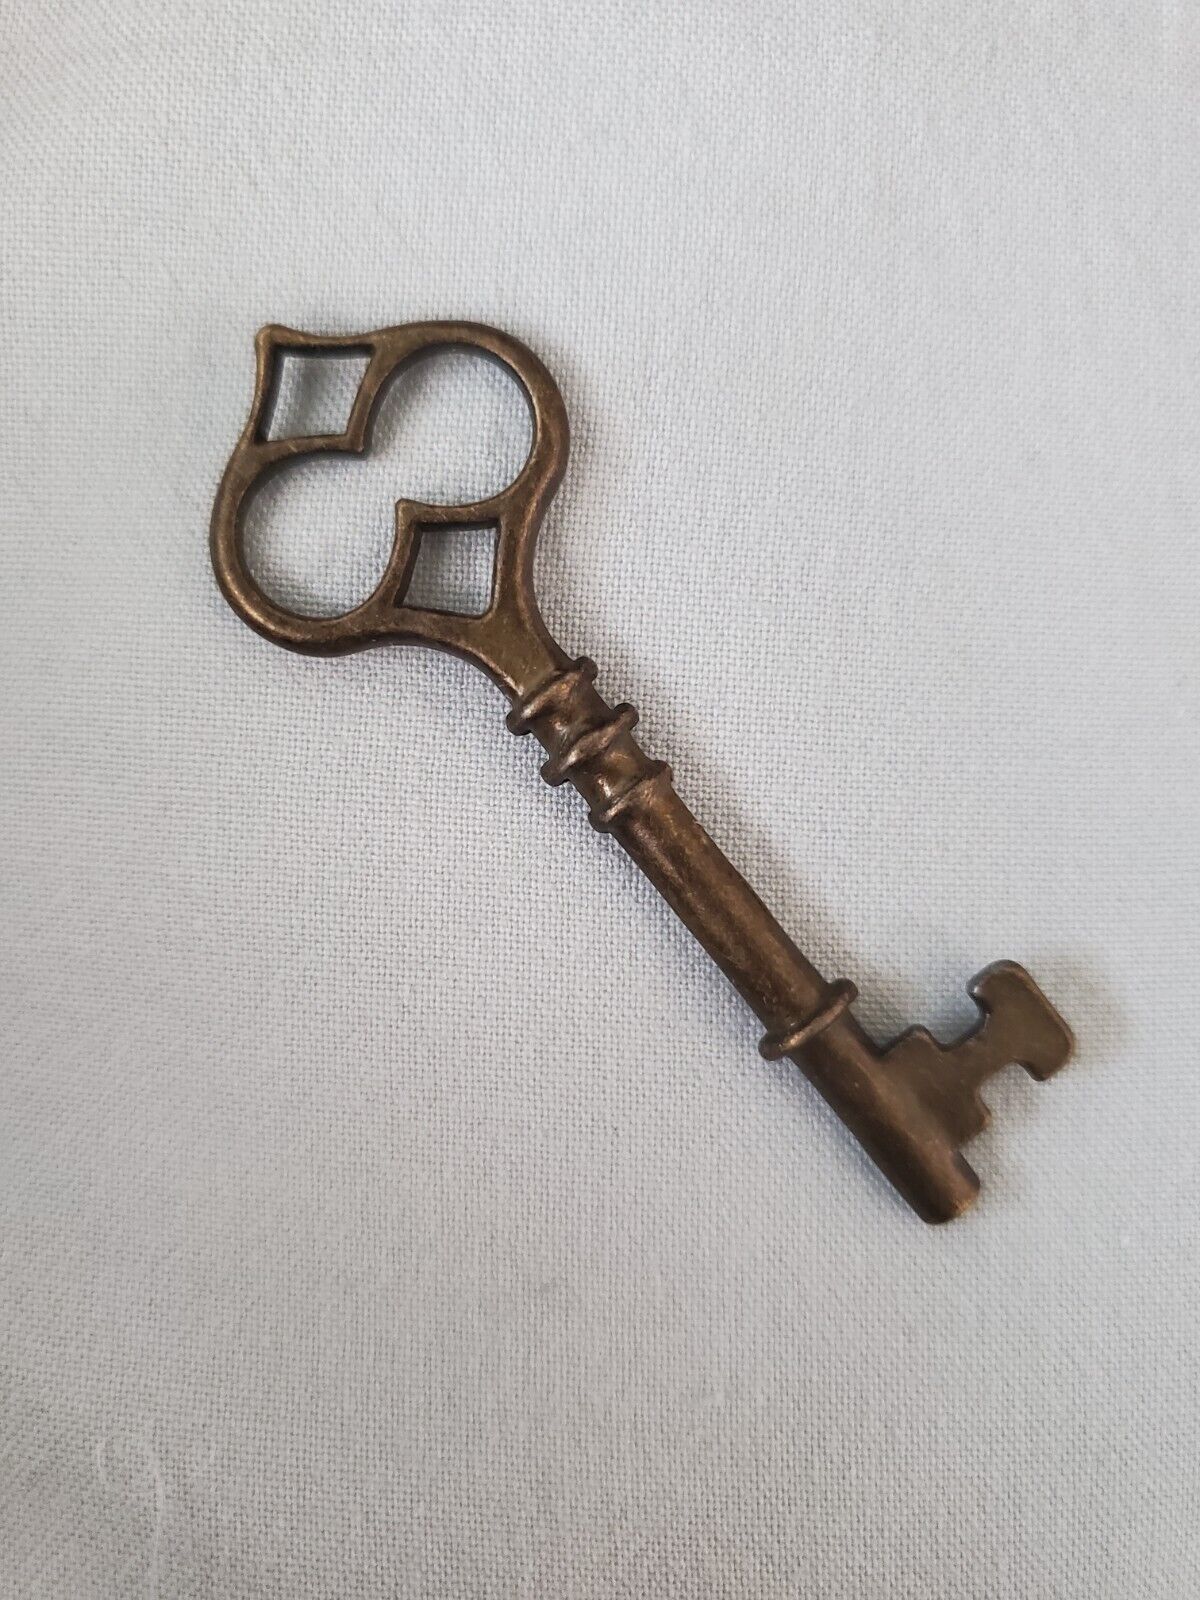 Antique Skeleton Key From Utah, United States